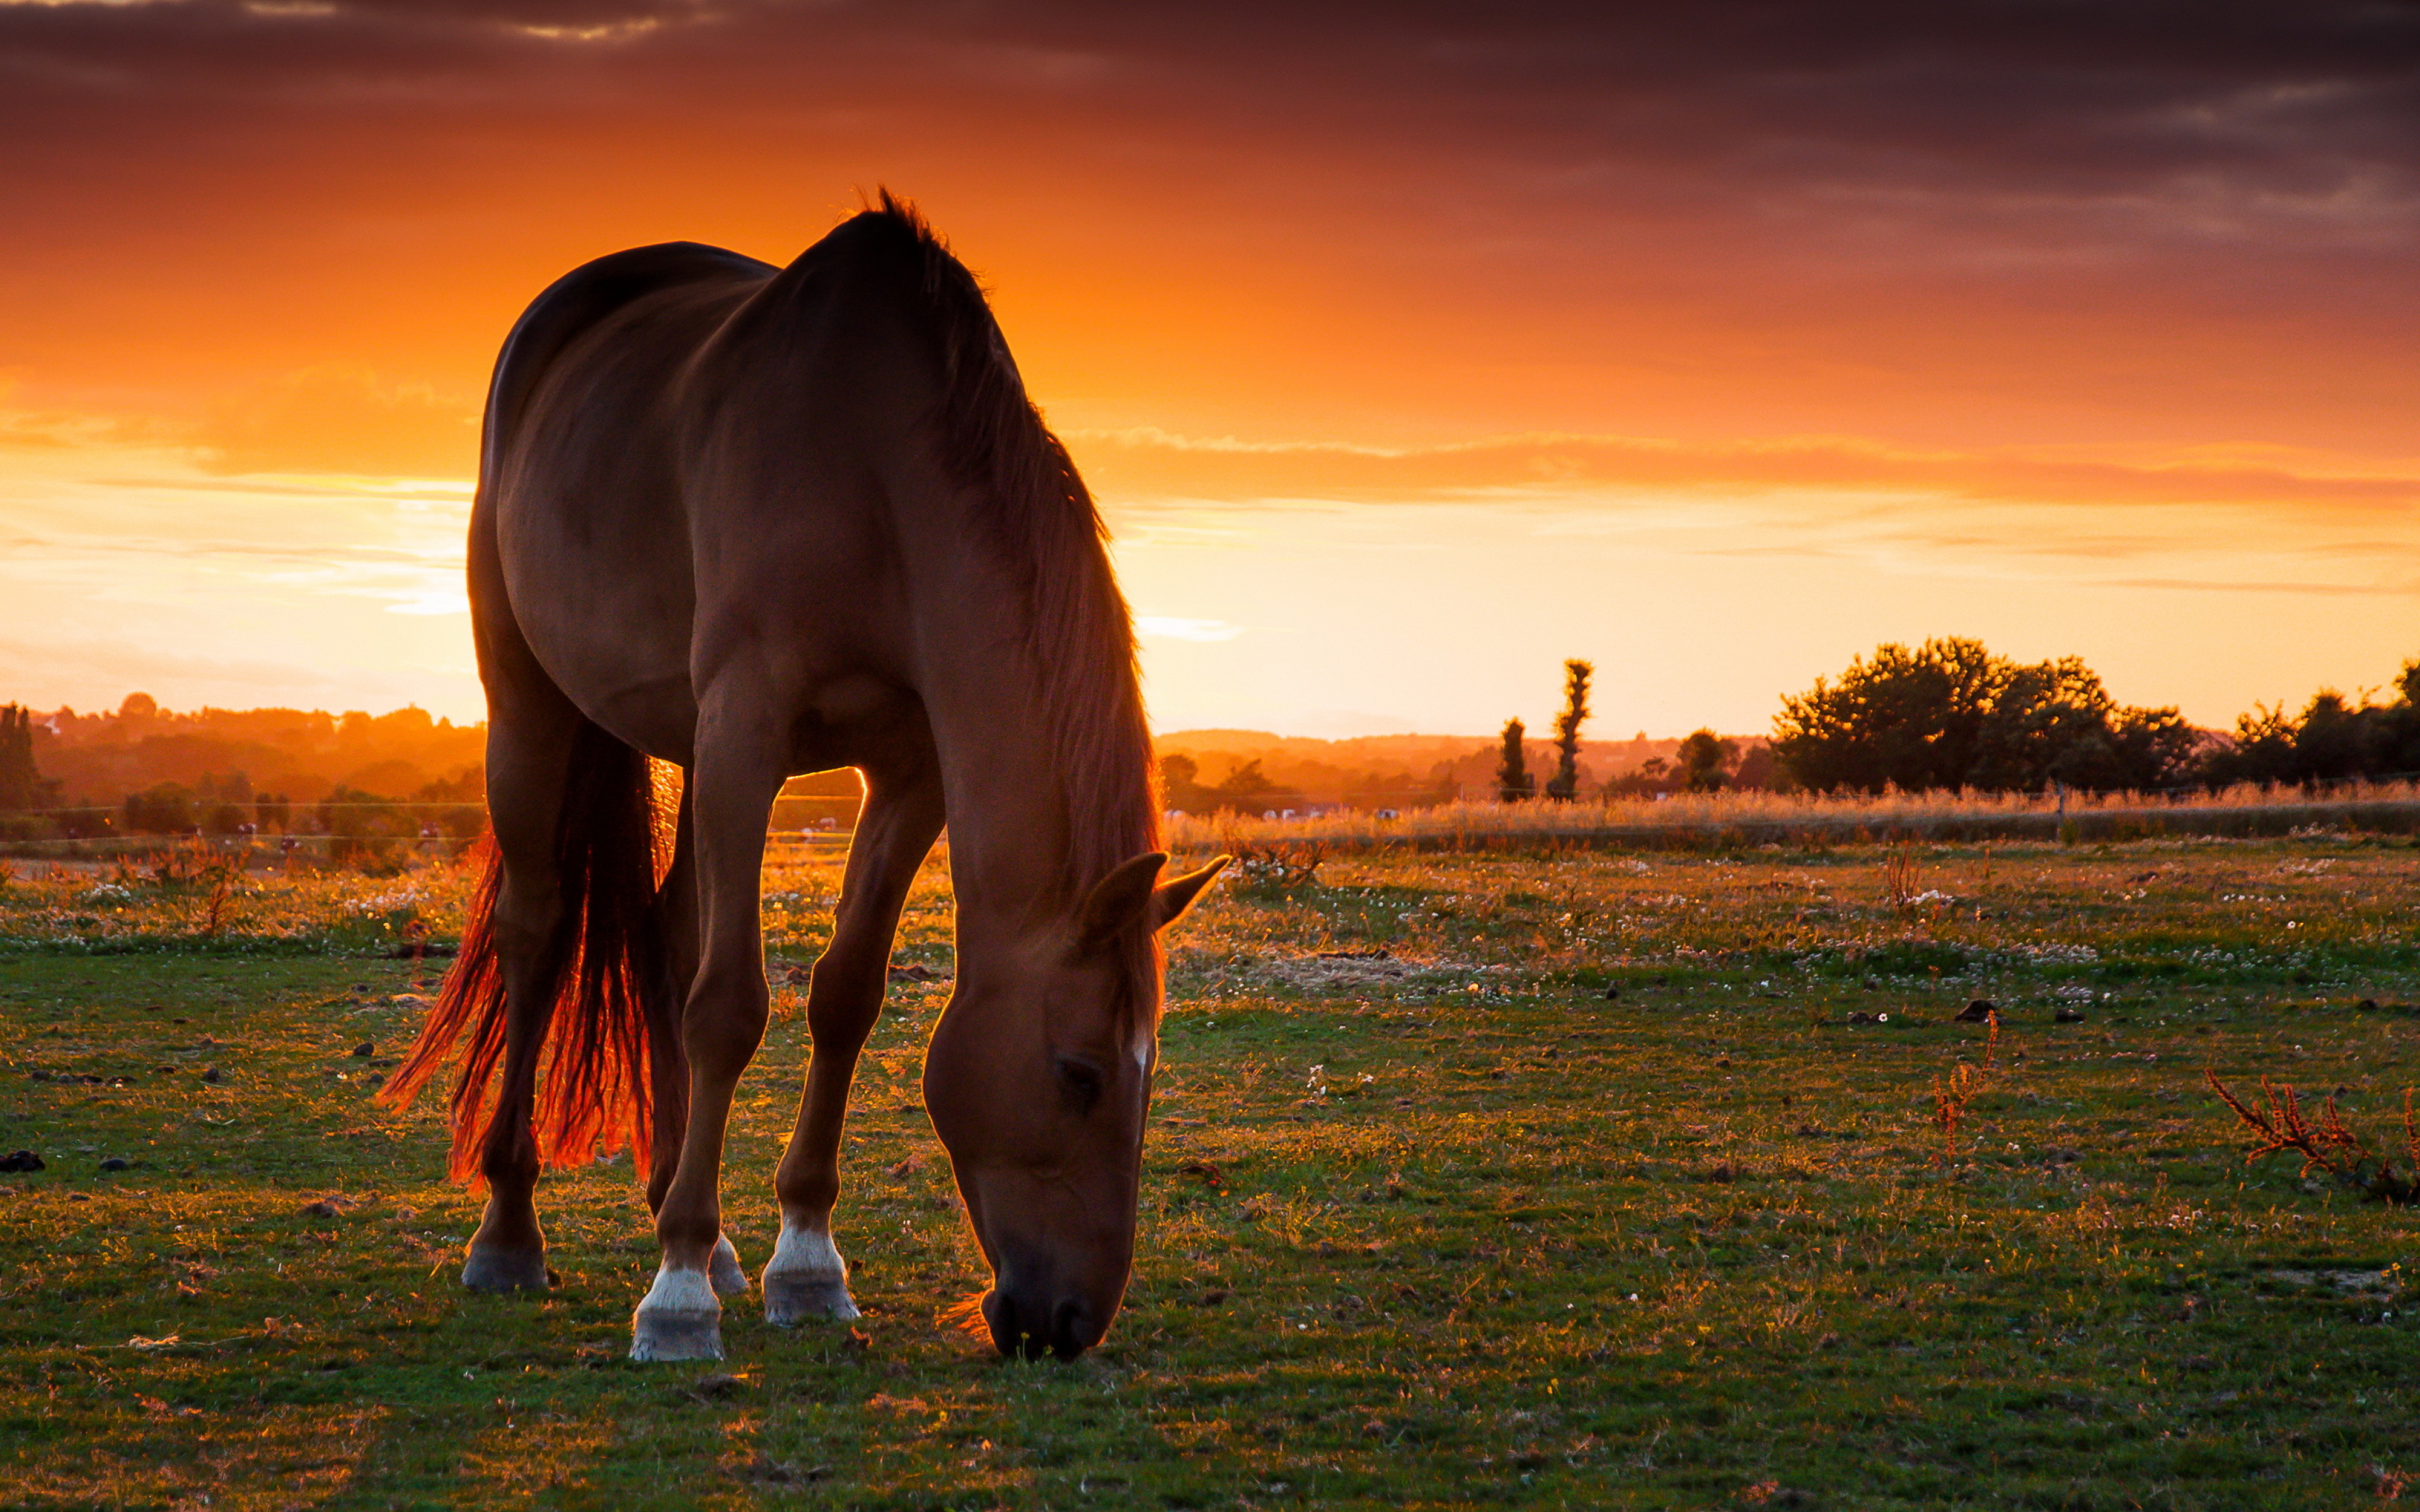 Картинки лошадей на заставку. Лошади на закате. Конь в поле. Лошади на рассвете. Лошади пасутся в поле.